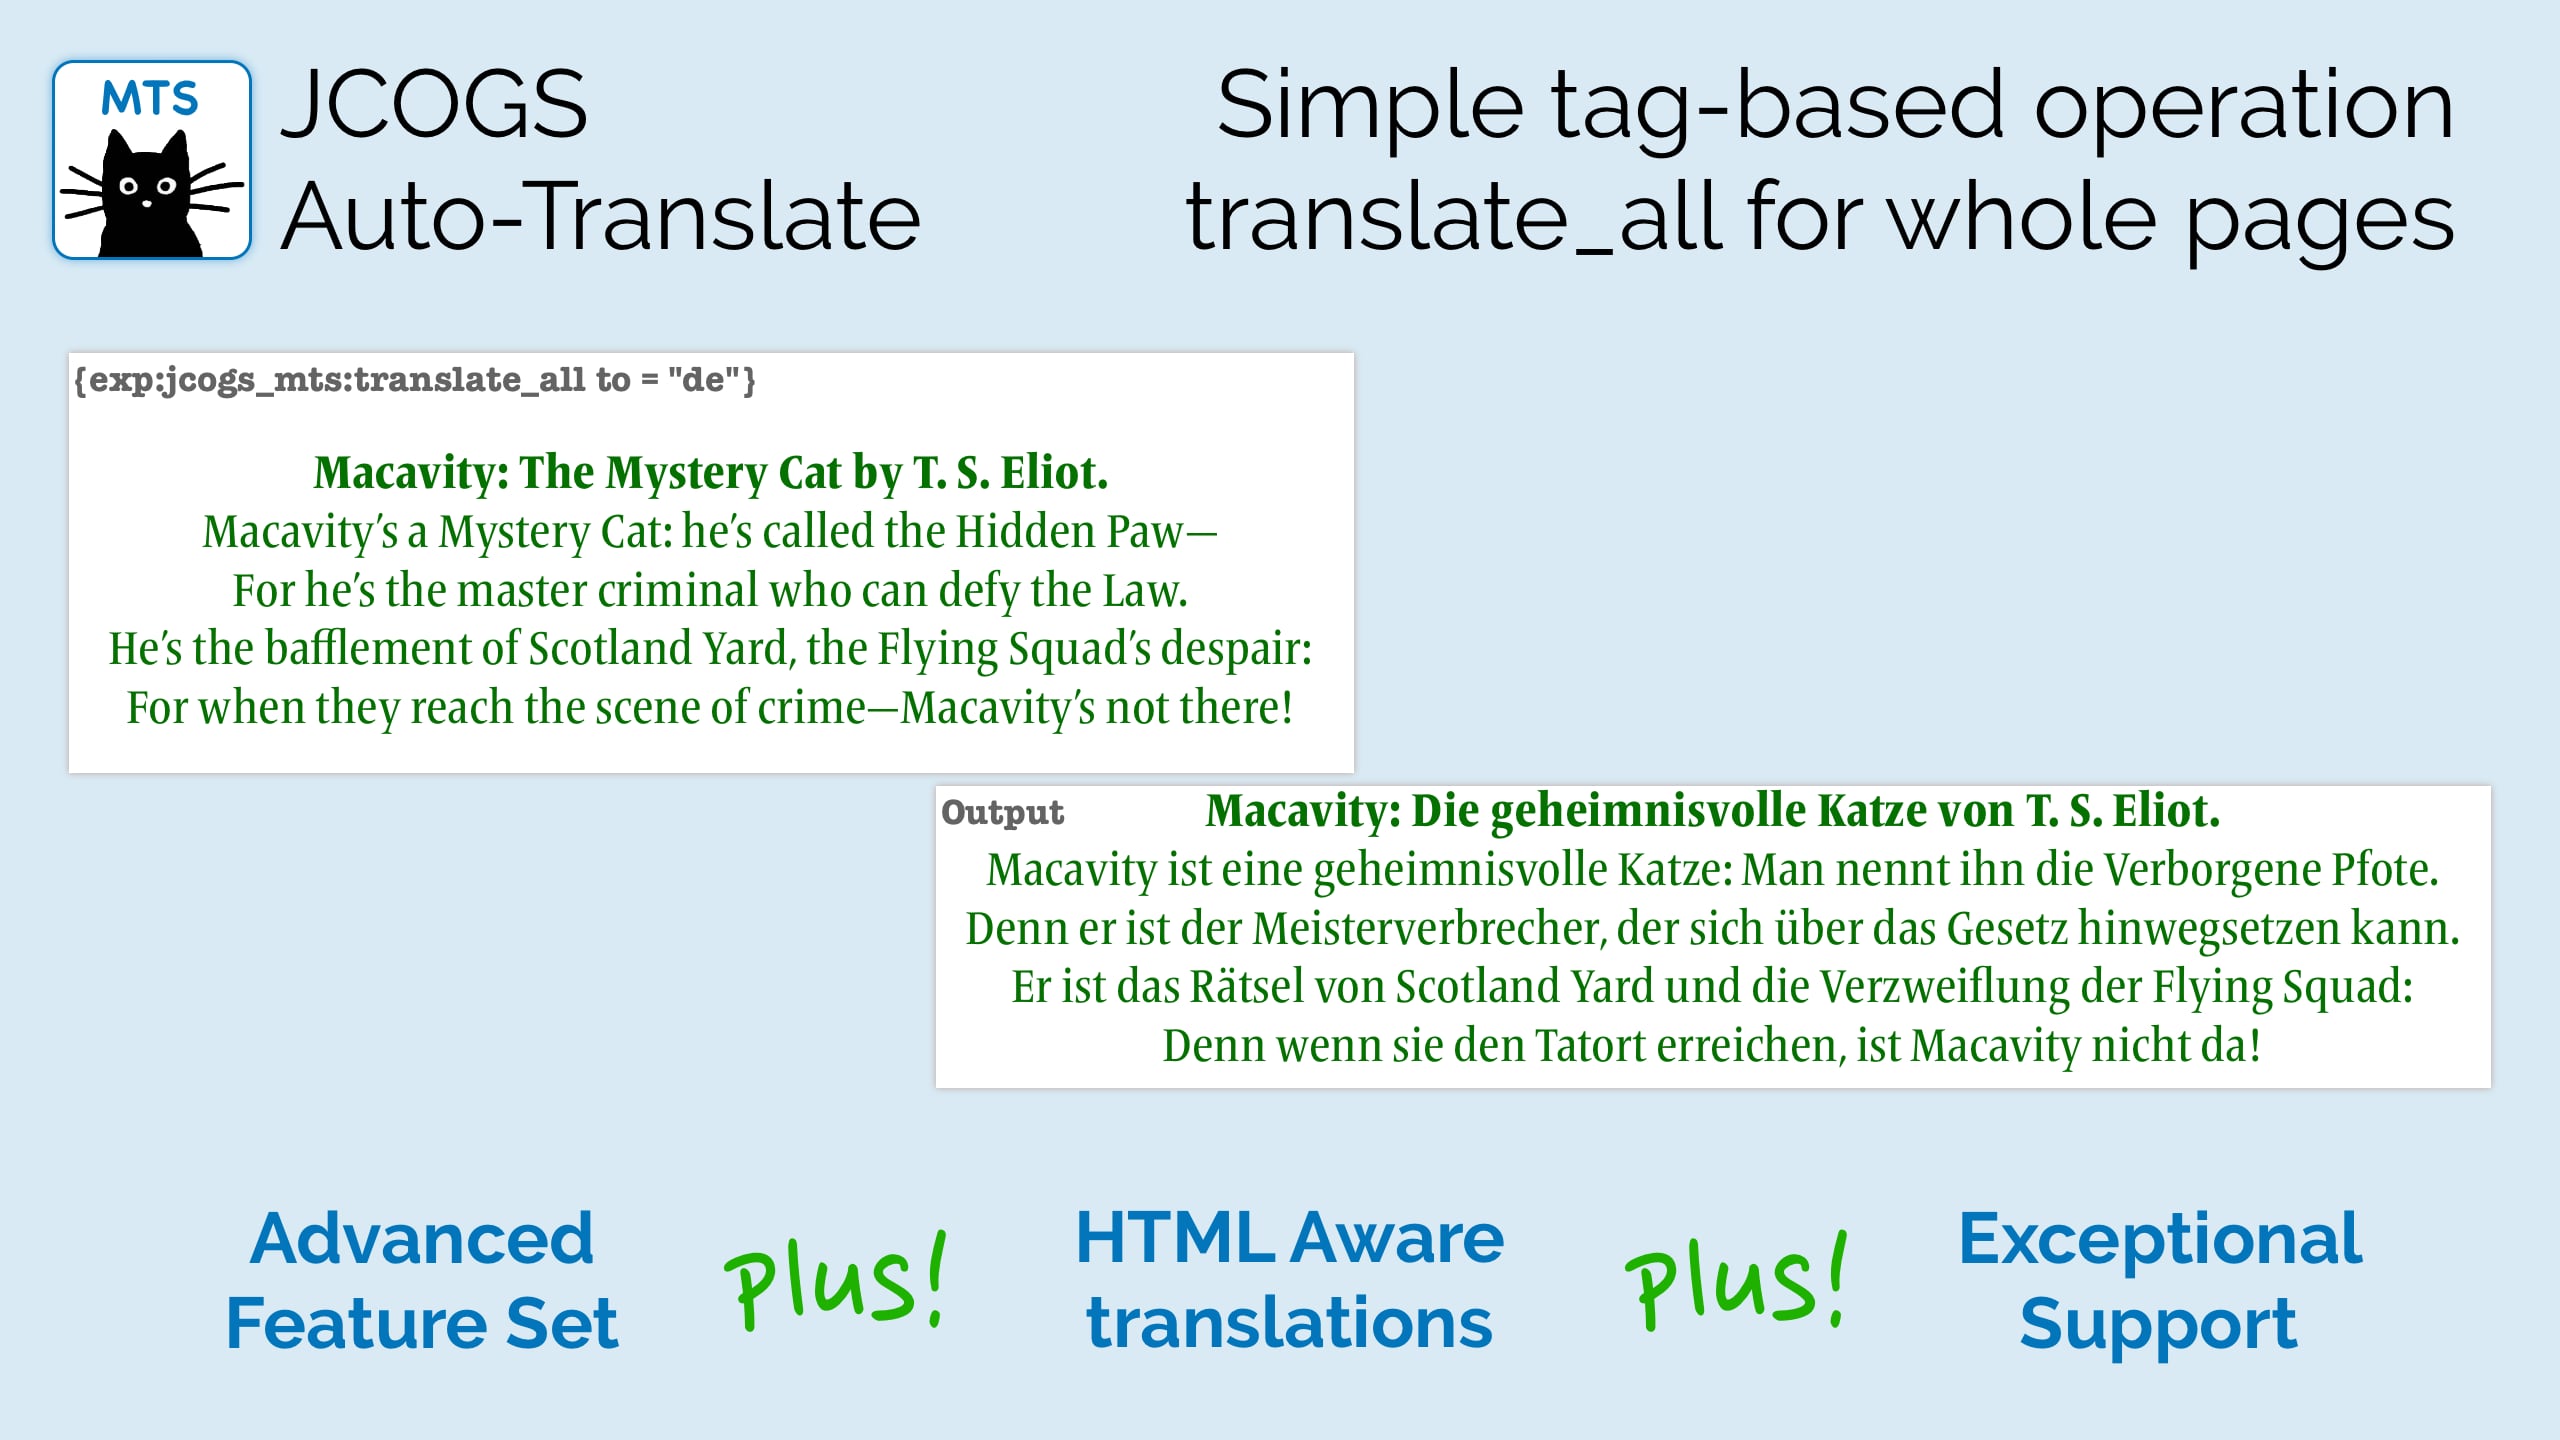 Simple tag-based operation - translate all